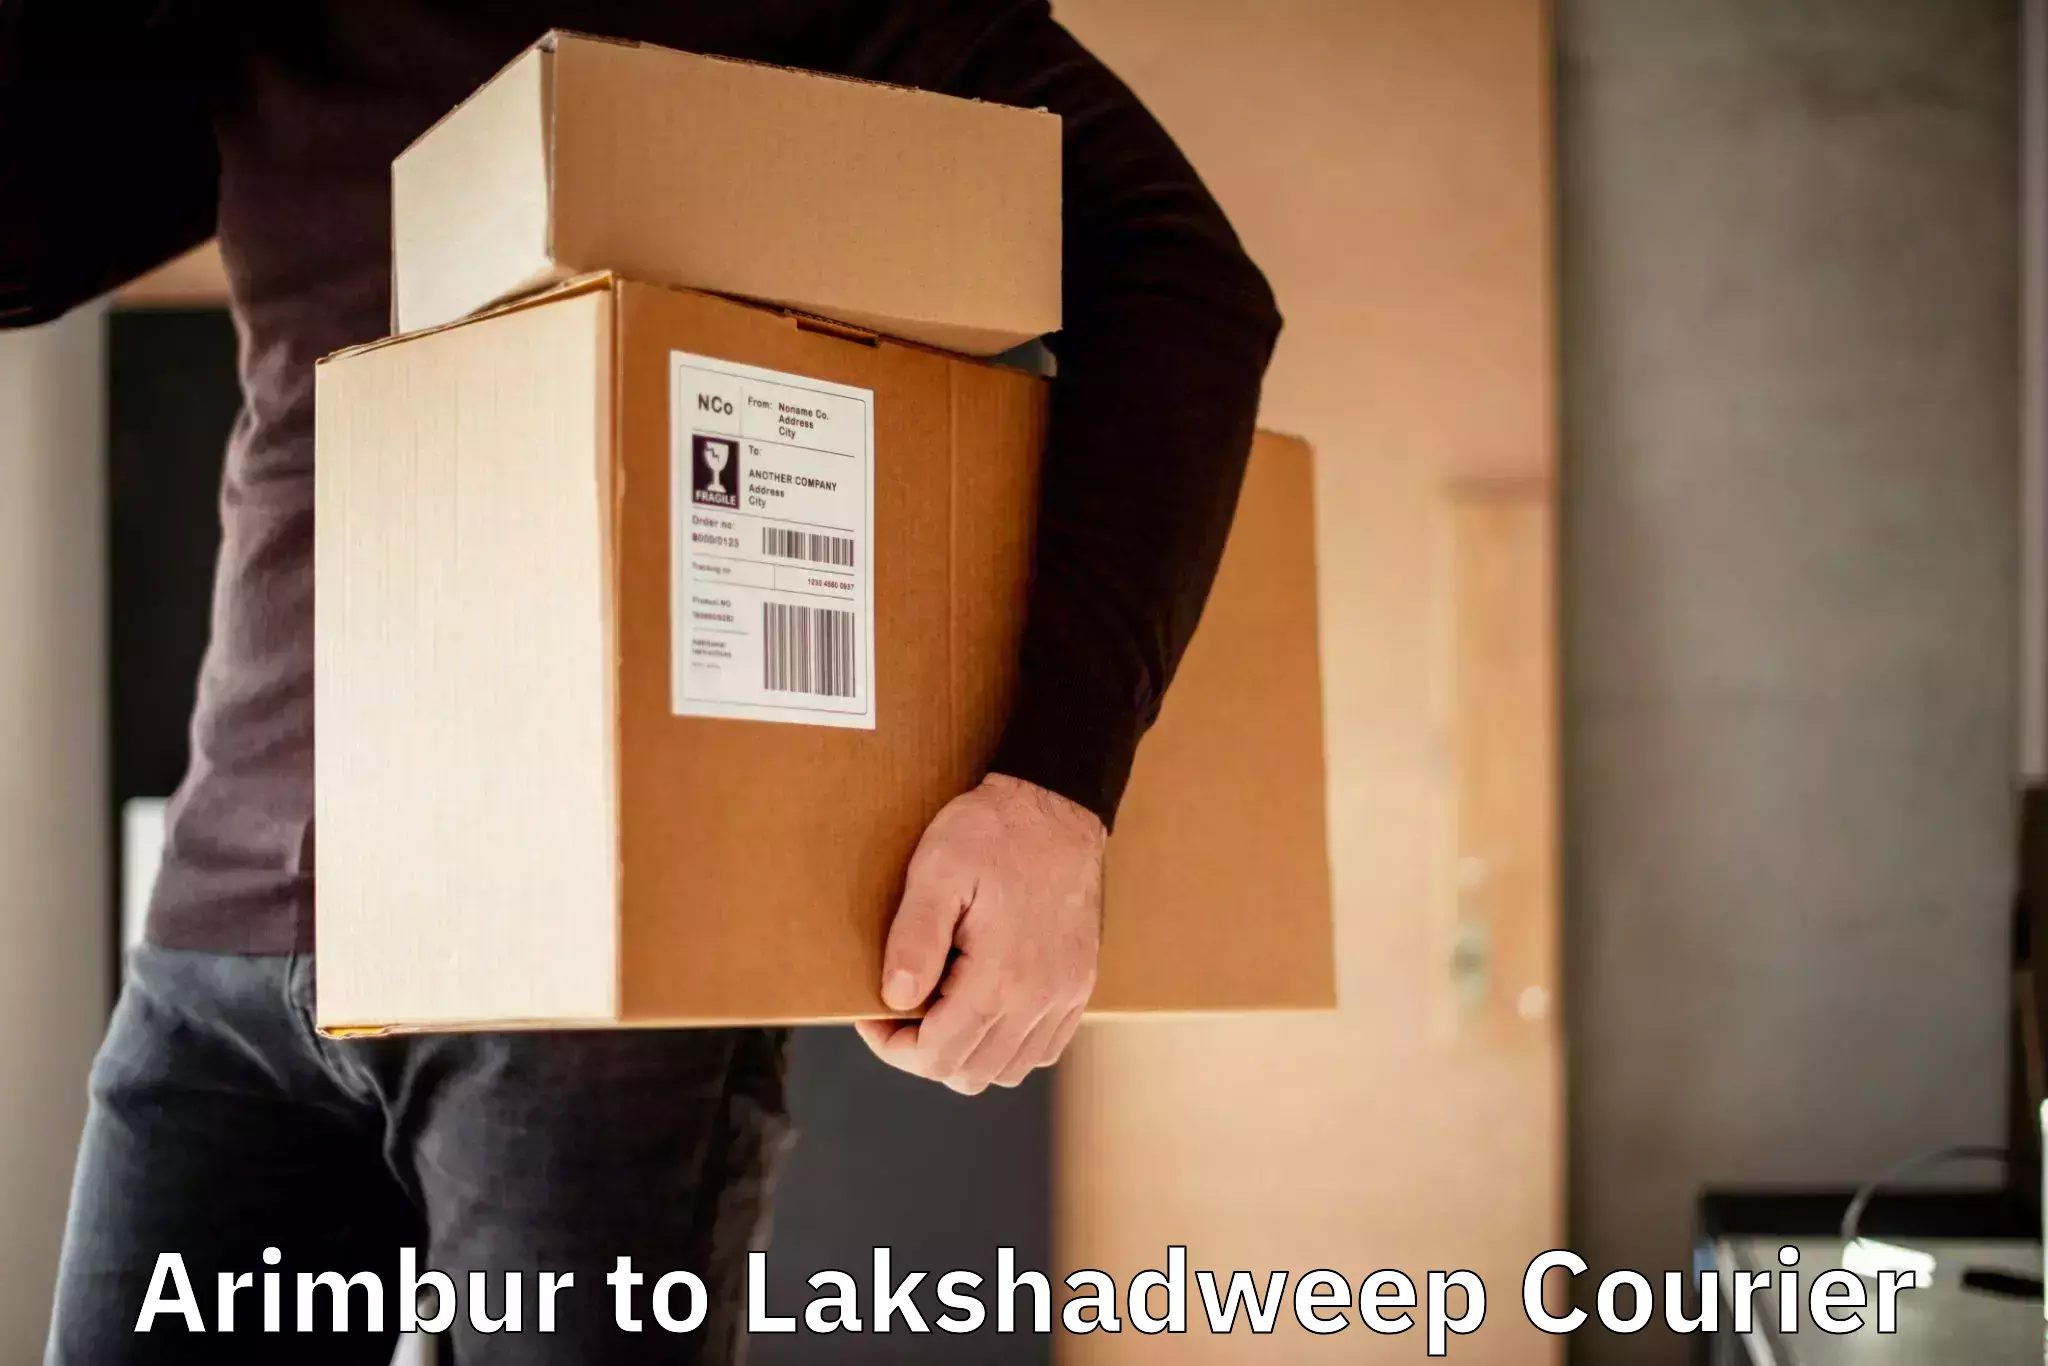 Emergency parcel delivery in Arimbur to Lakshadweep